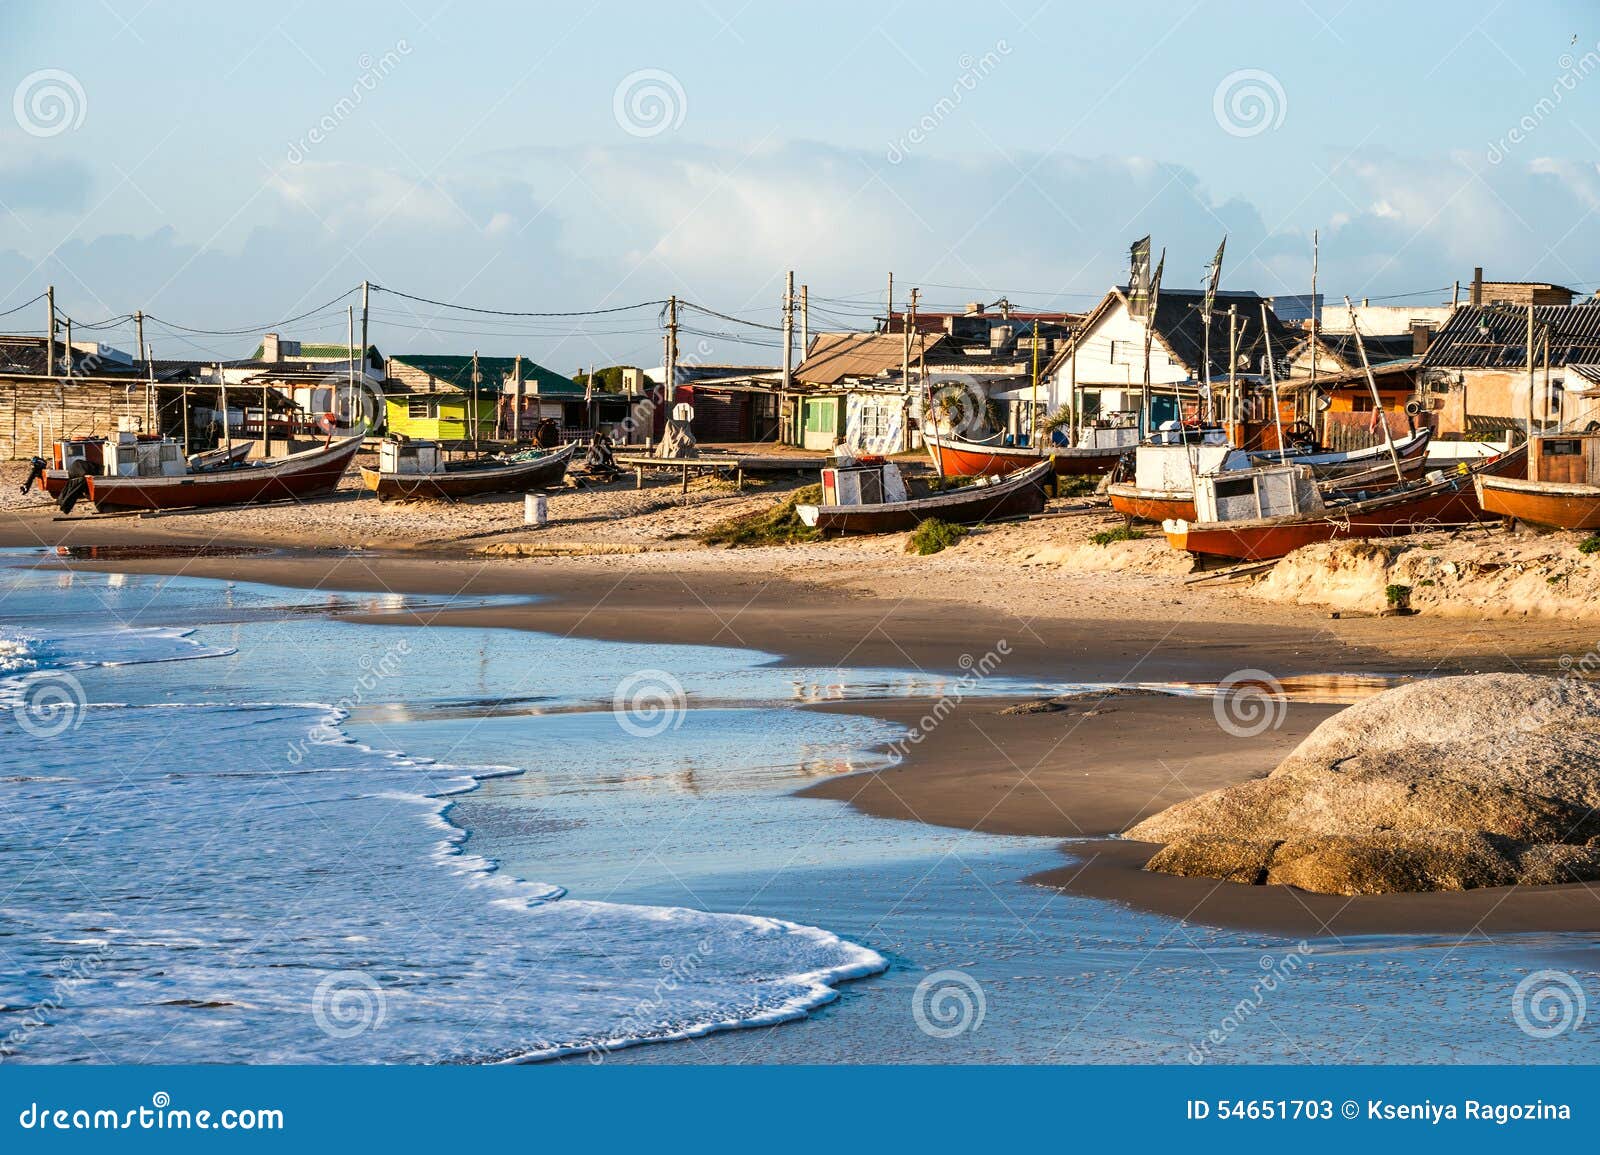 punta del diablo beach, popular tourist site and fisherman's place in the uruguay coast